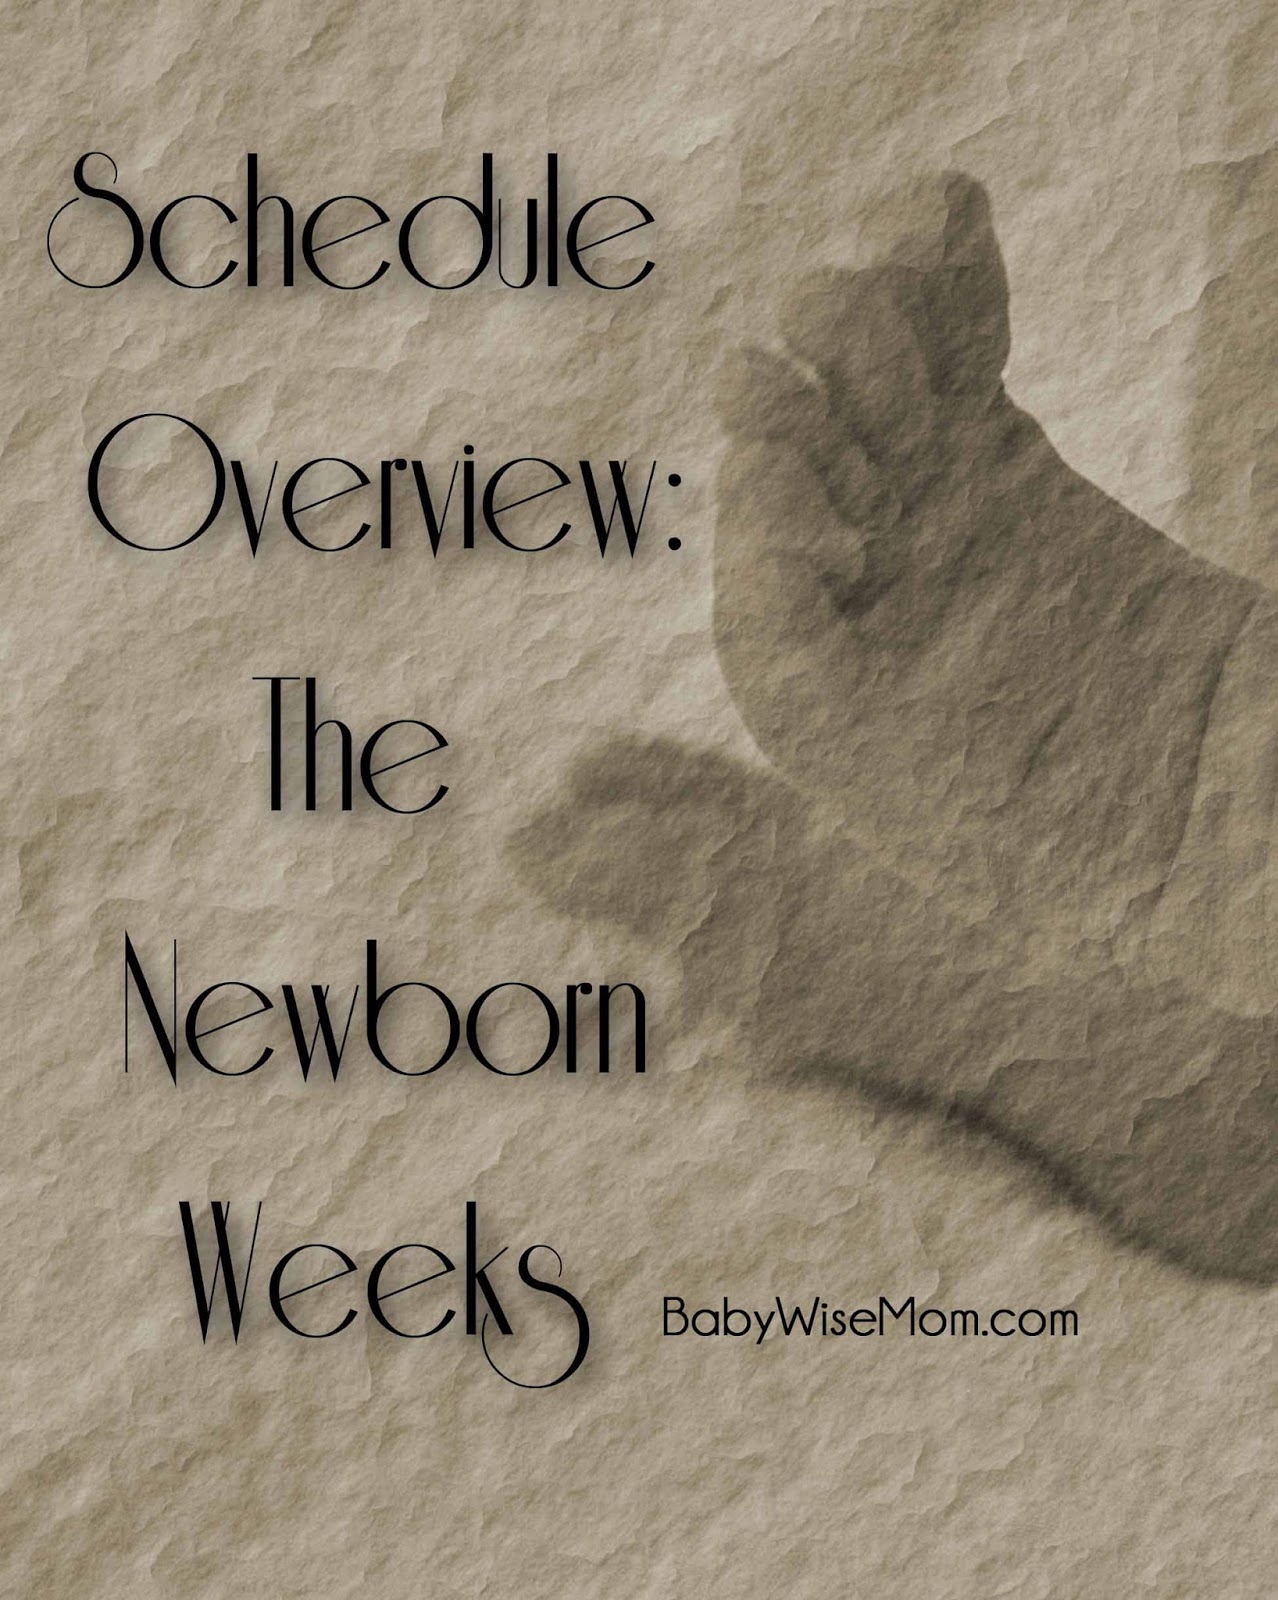 Schedule Overview of The Newborn Weeks